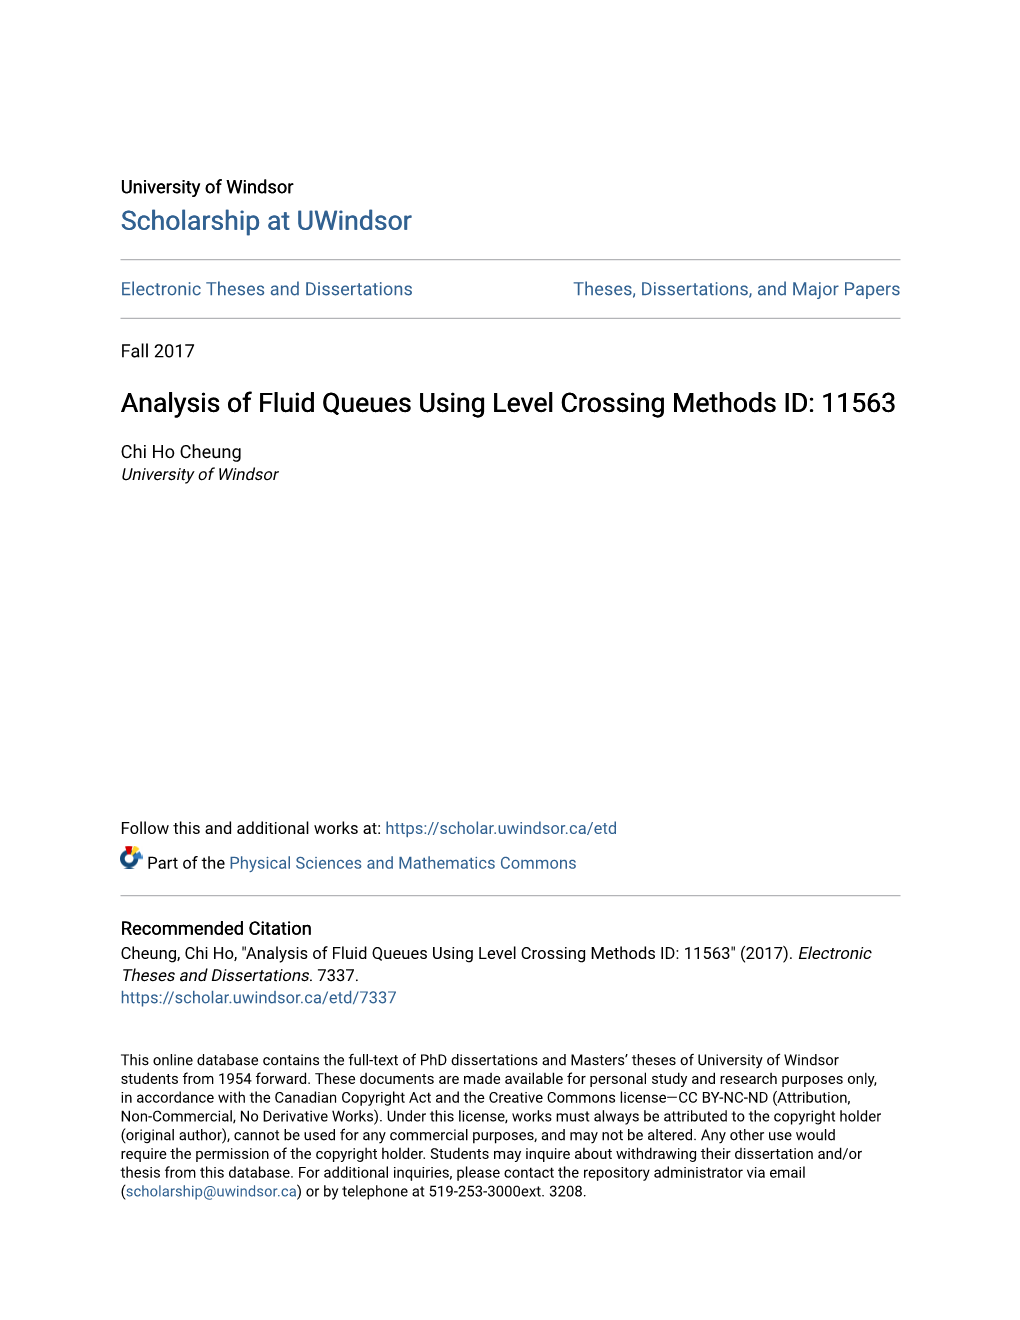 Analysis of Fluid Queues Using Level Crossing Methods ID: 11563